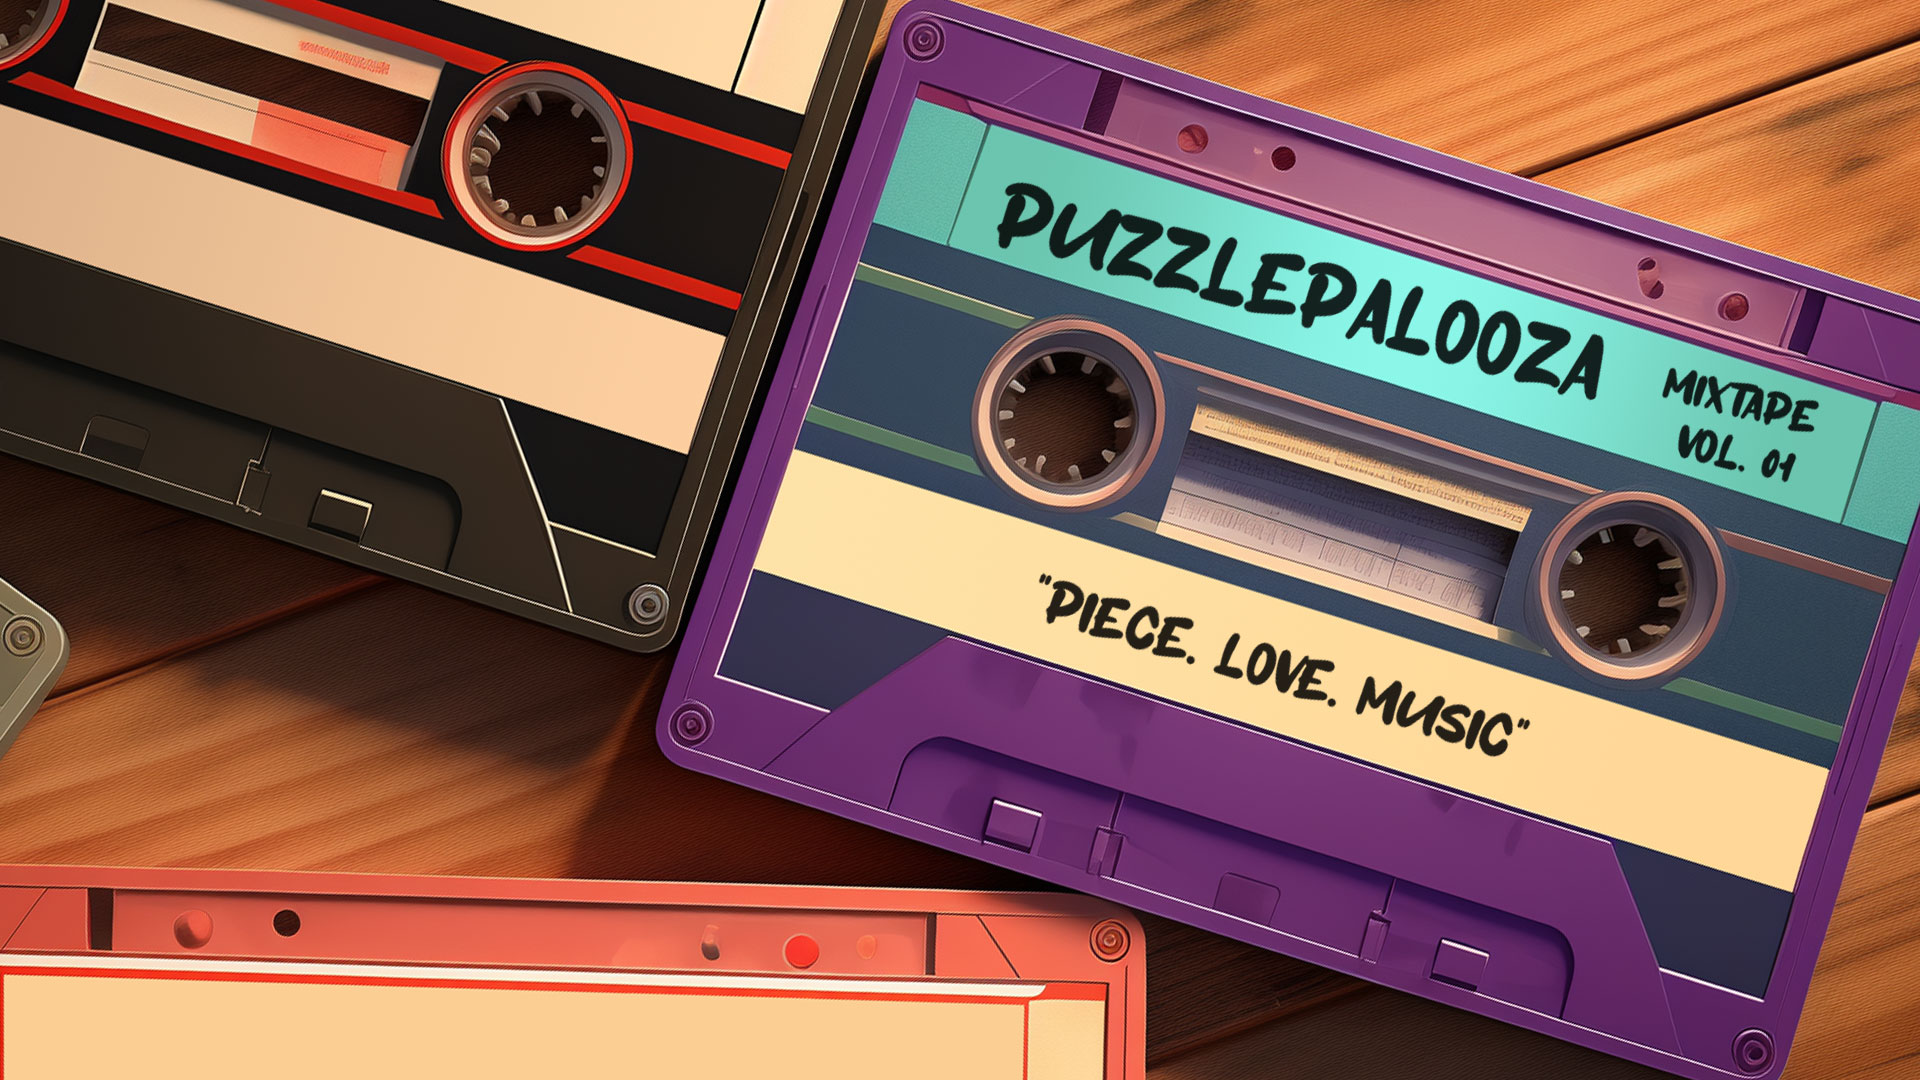 Puzzlepalooza Mixtape Vol. 01 – Piece. Love. Music. Banner Graphic